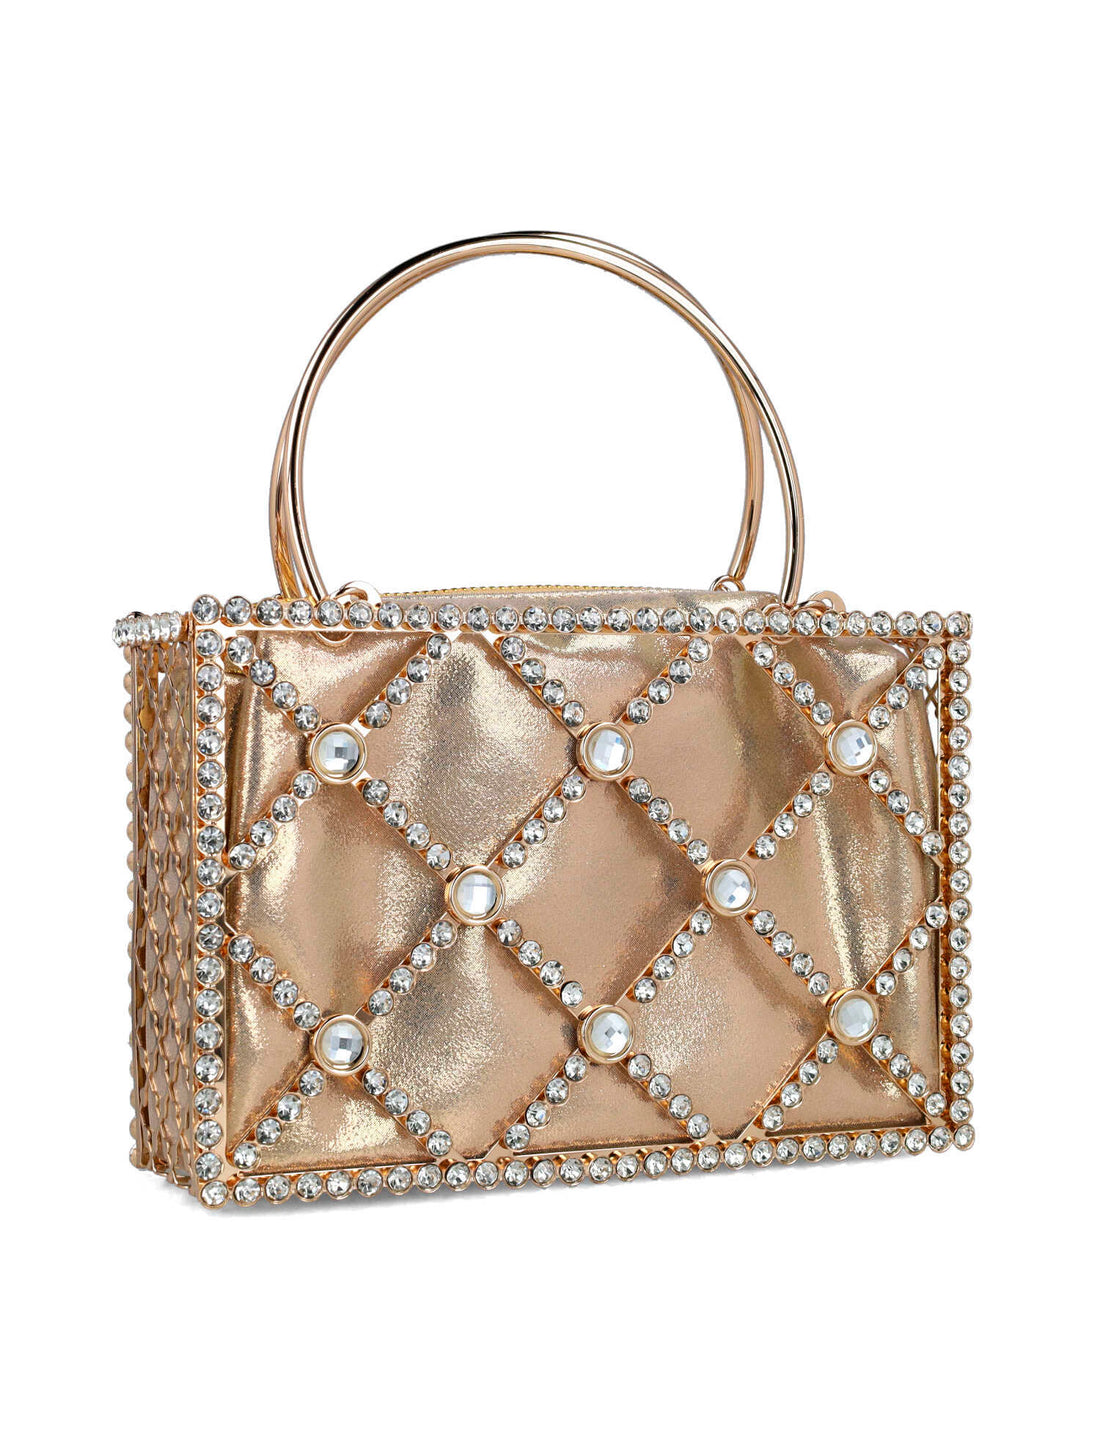 Embellished Square Handbag With Round Straps_85720_00_02